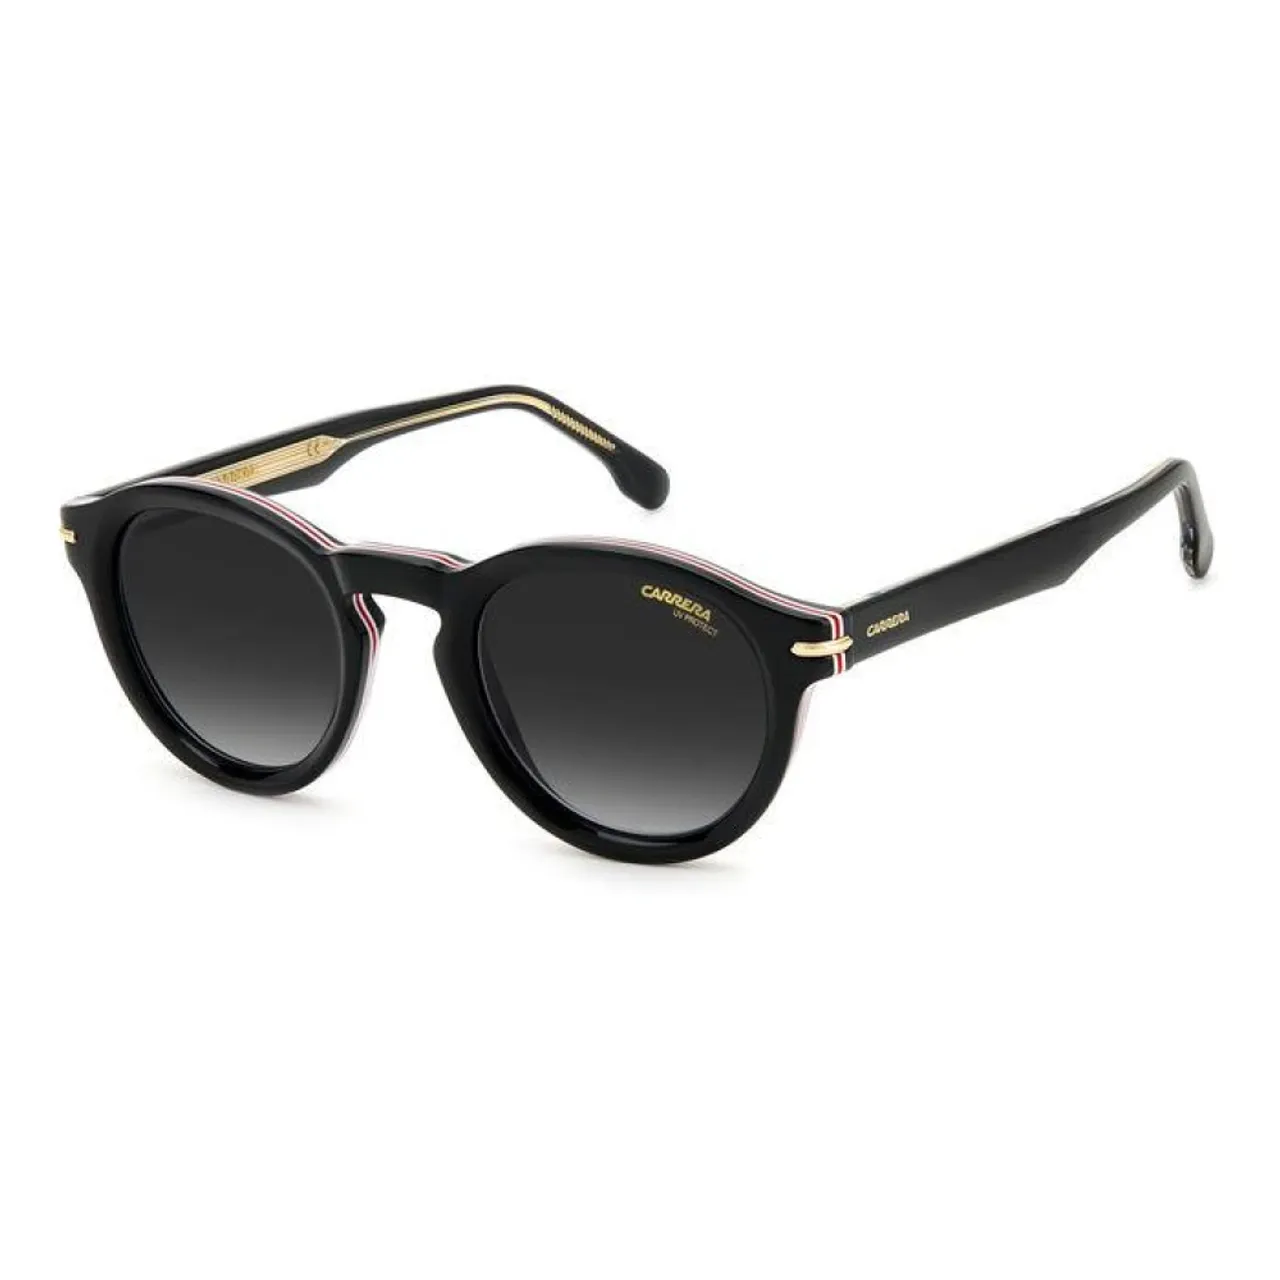 Sunglasses Carrera